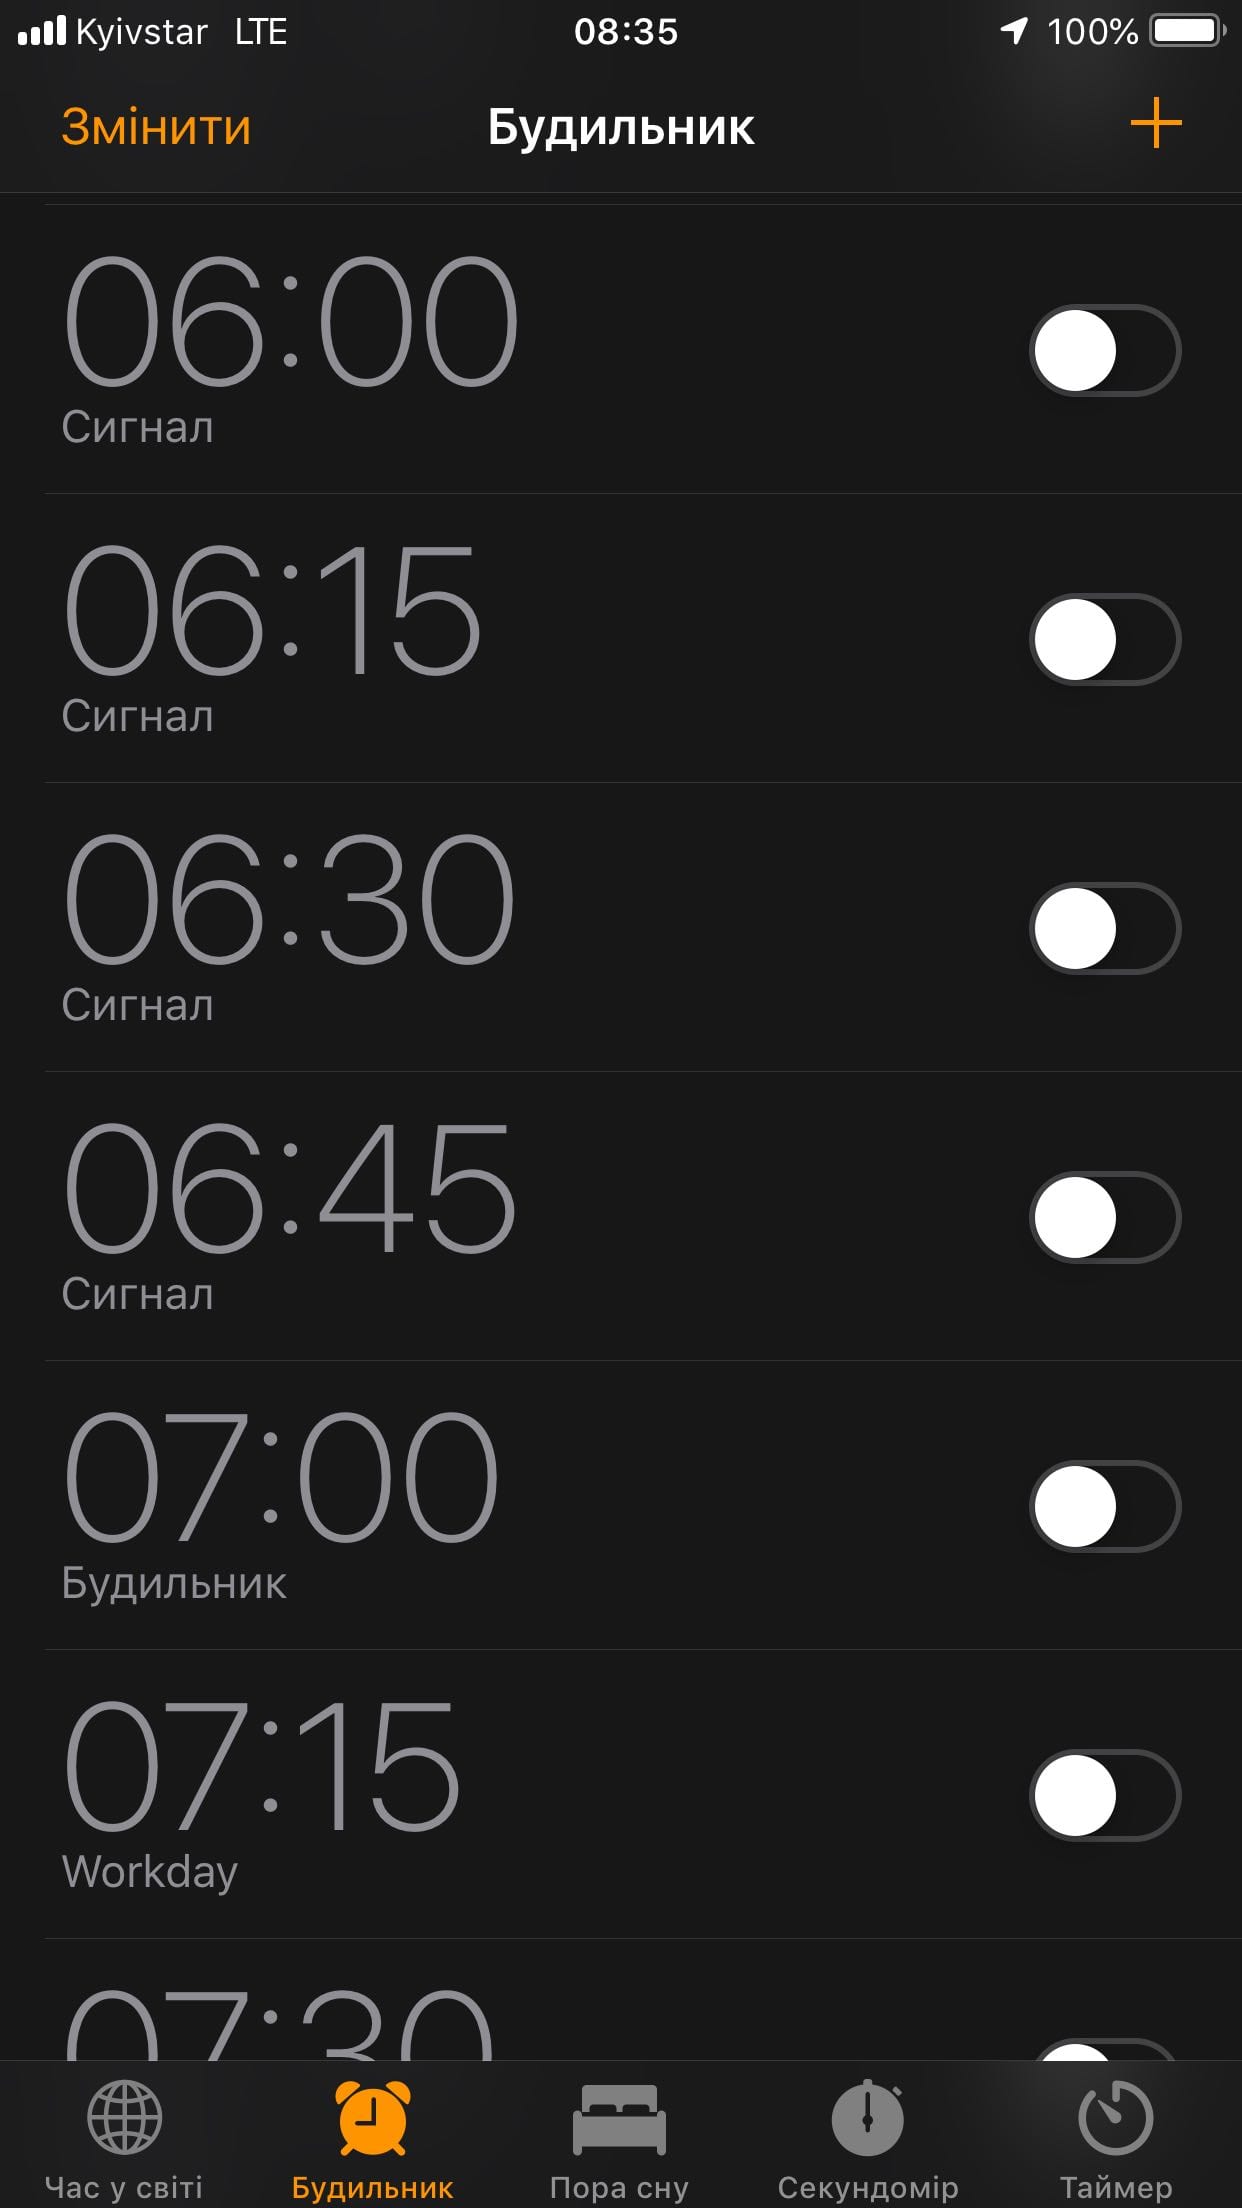 iPhone smart alarm